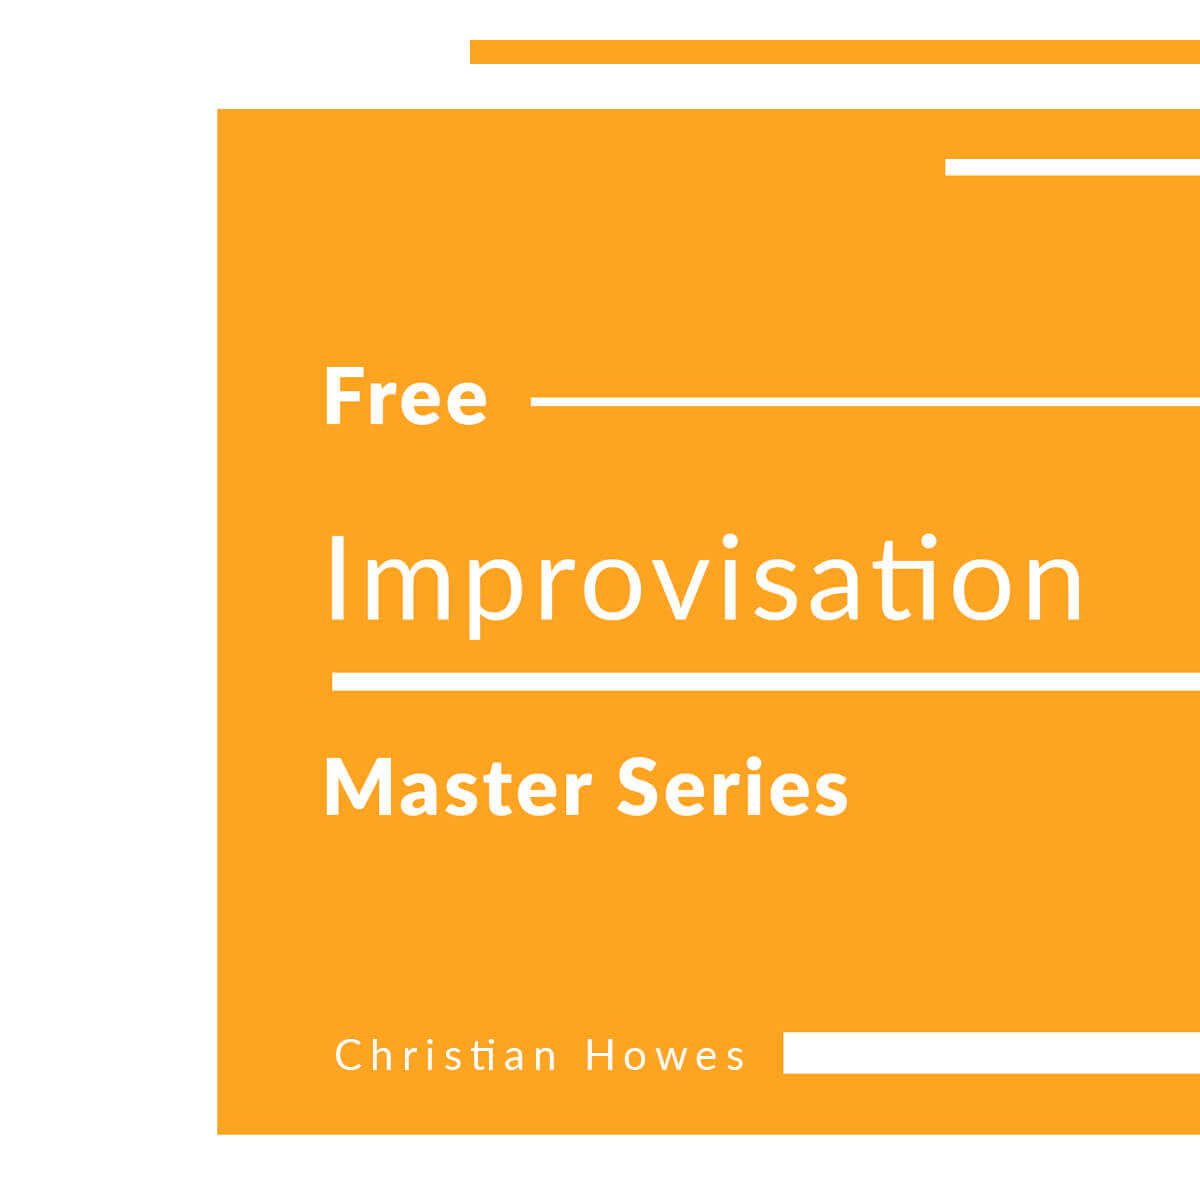 Free Improvisation Master Series (Video Series)